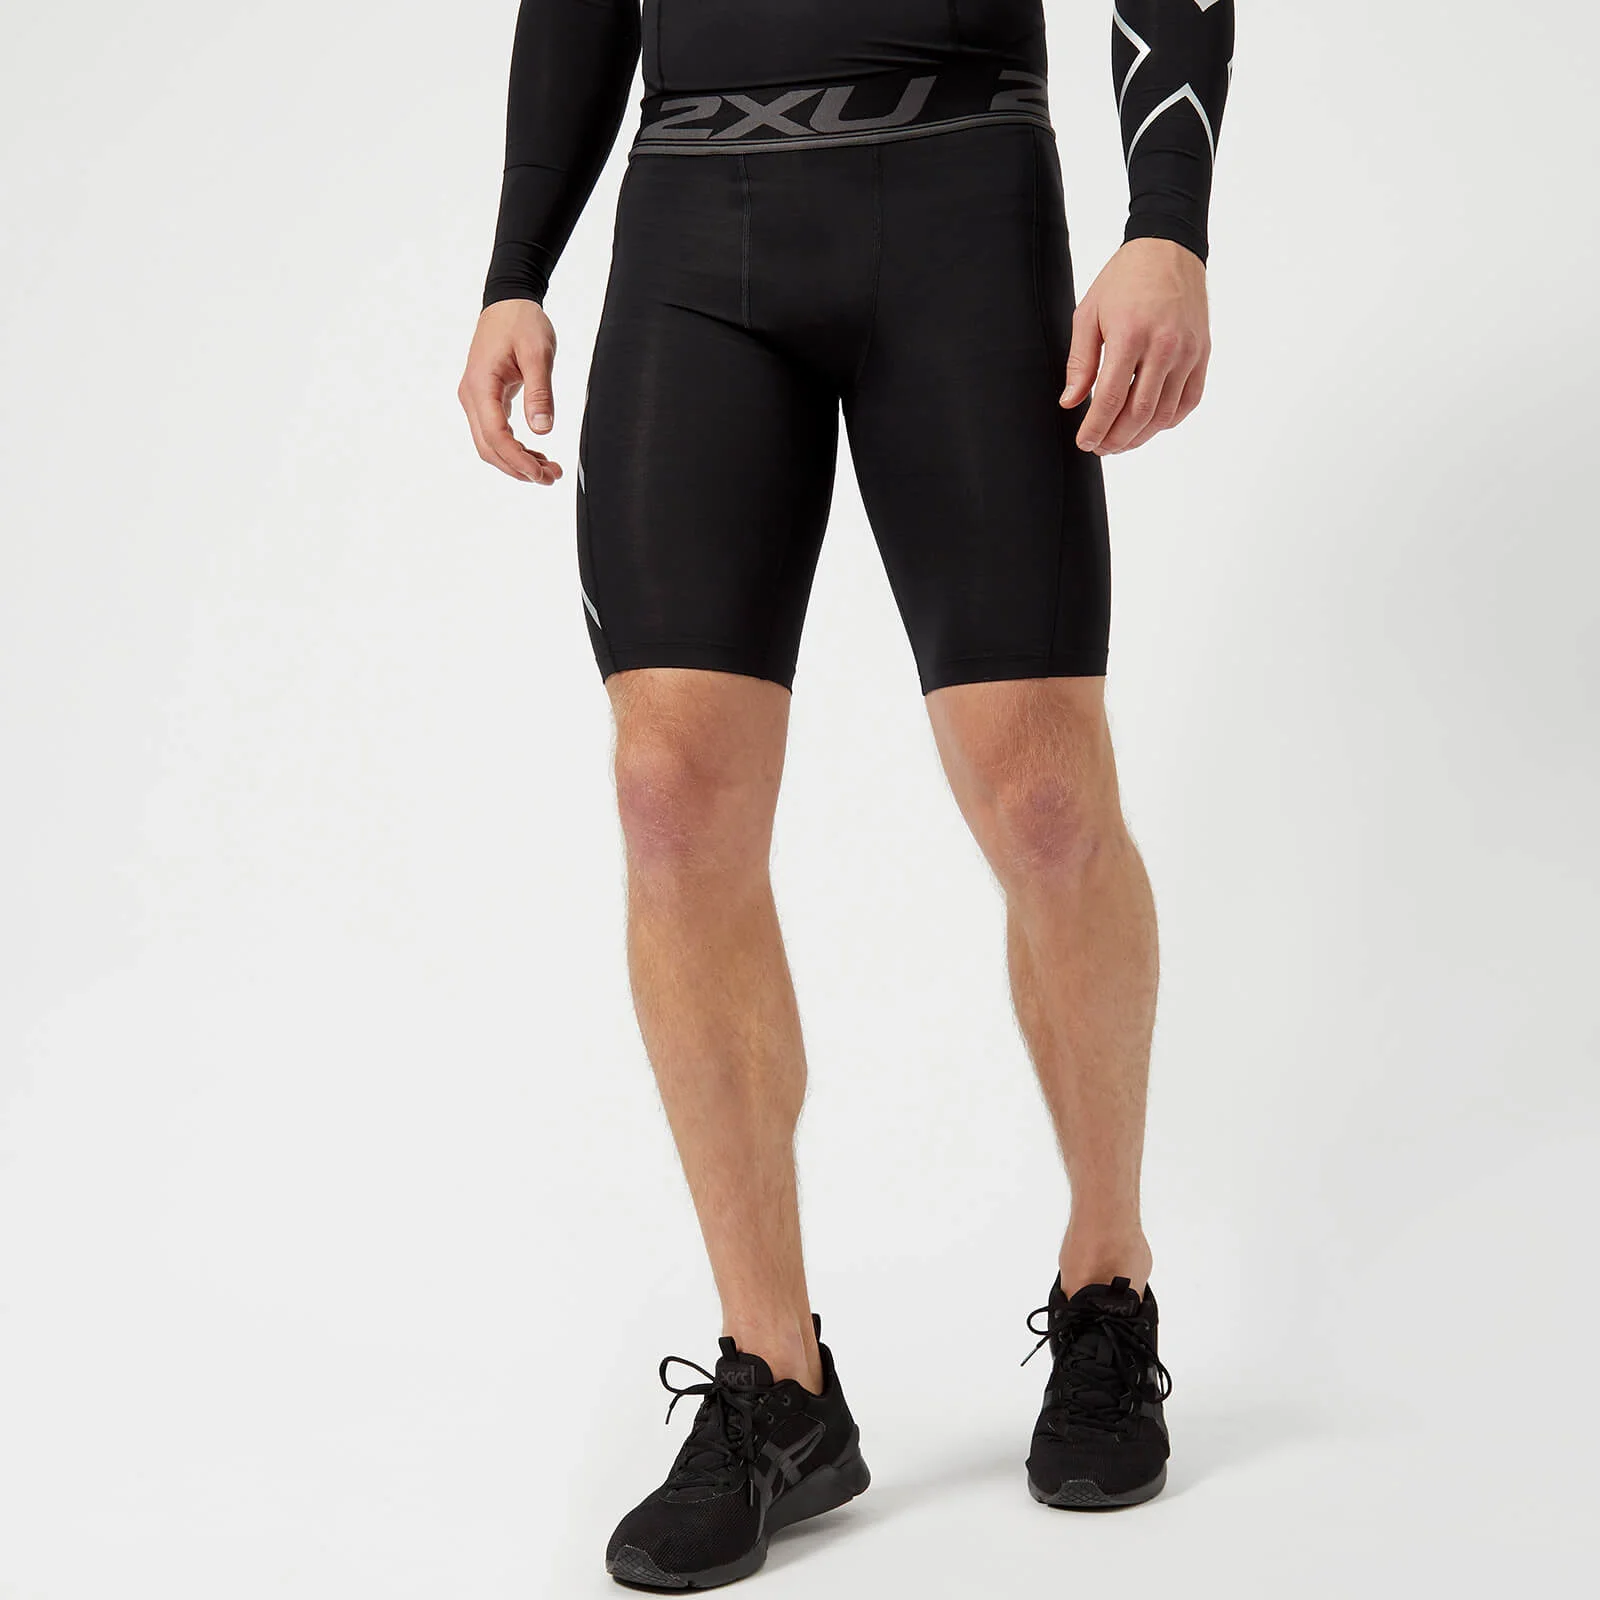 2XU Men's Accelerate Compression Shorts - Black/SIlver Image 1